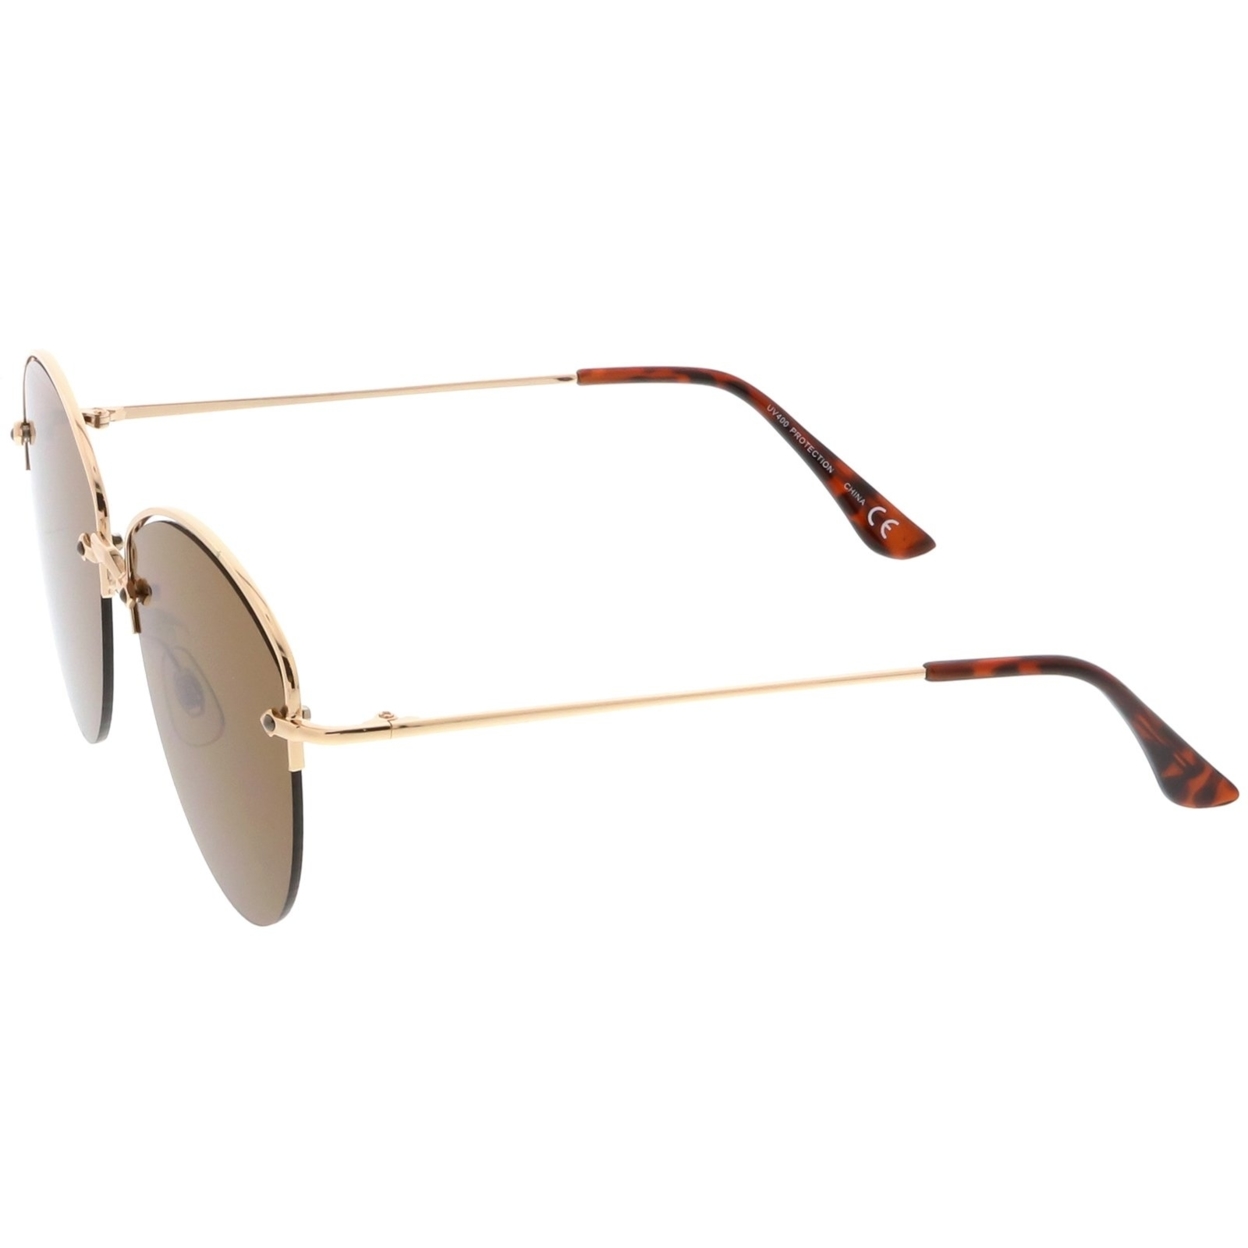 Modern Metal Nose Bridge Flat Lens Semi-Rimless Sunglasses 60mm - Gold / Smoke